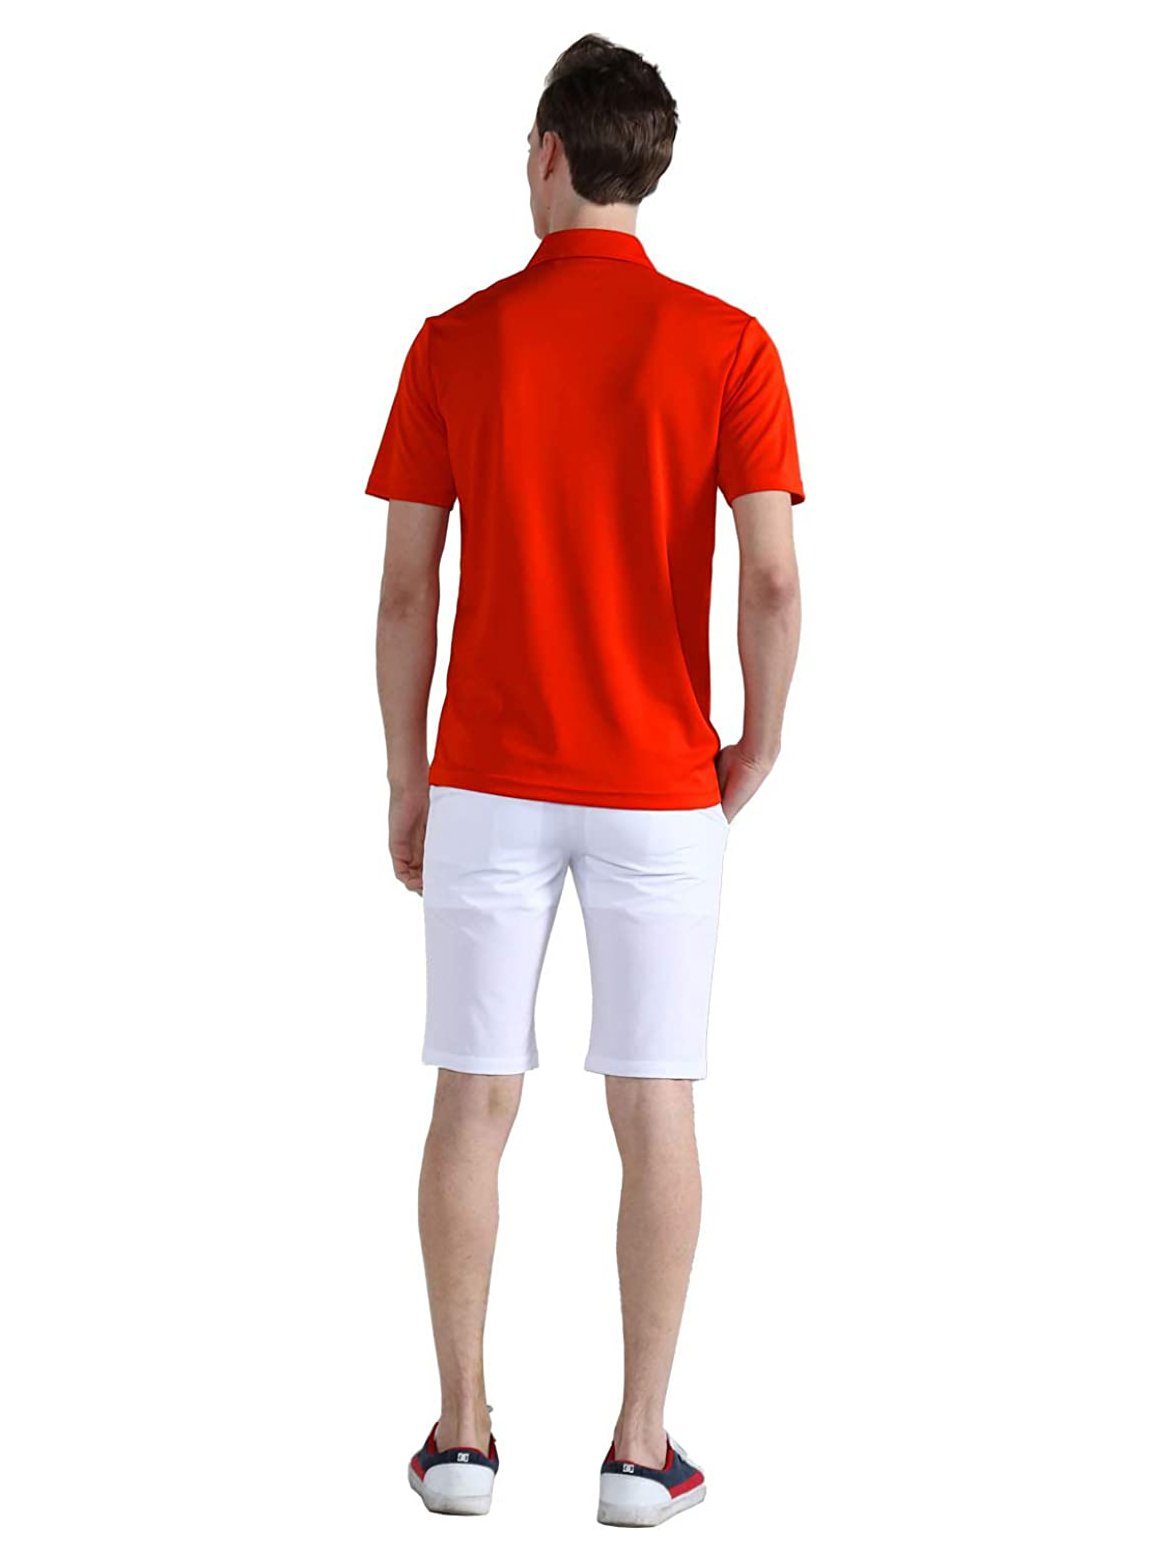 DEBAIJIA Poloshirt DEBAIJIA Herren Orange Gemütlich Poloshirt Standard Leicht Kurzarm Fit Golf